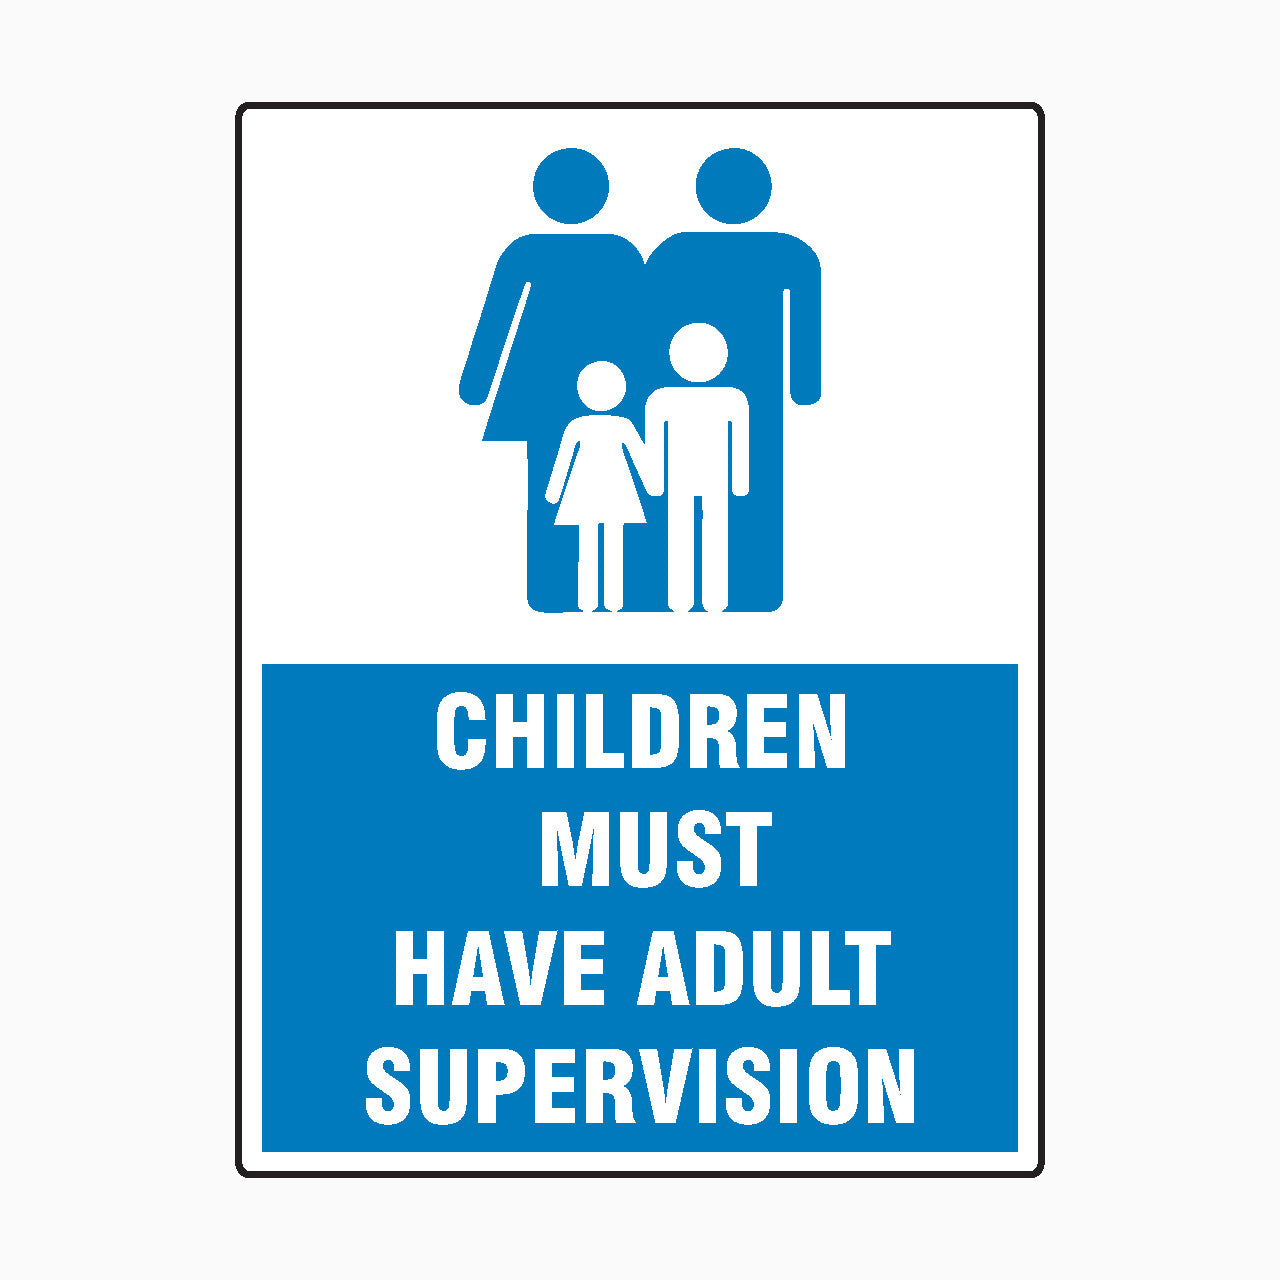 CHILDREN MUST HAVE ADULT SUPERVISION SIGN